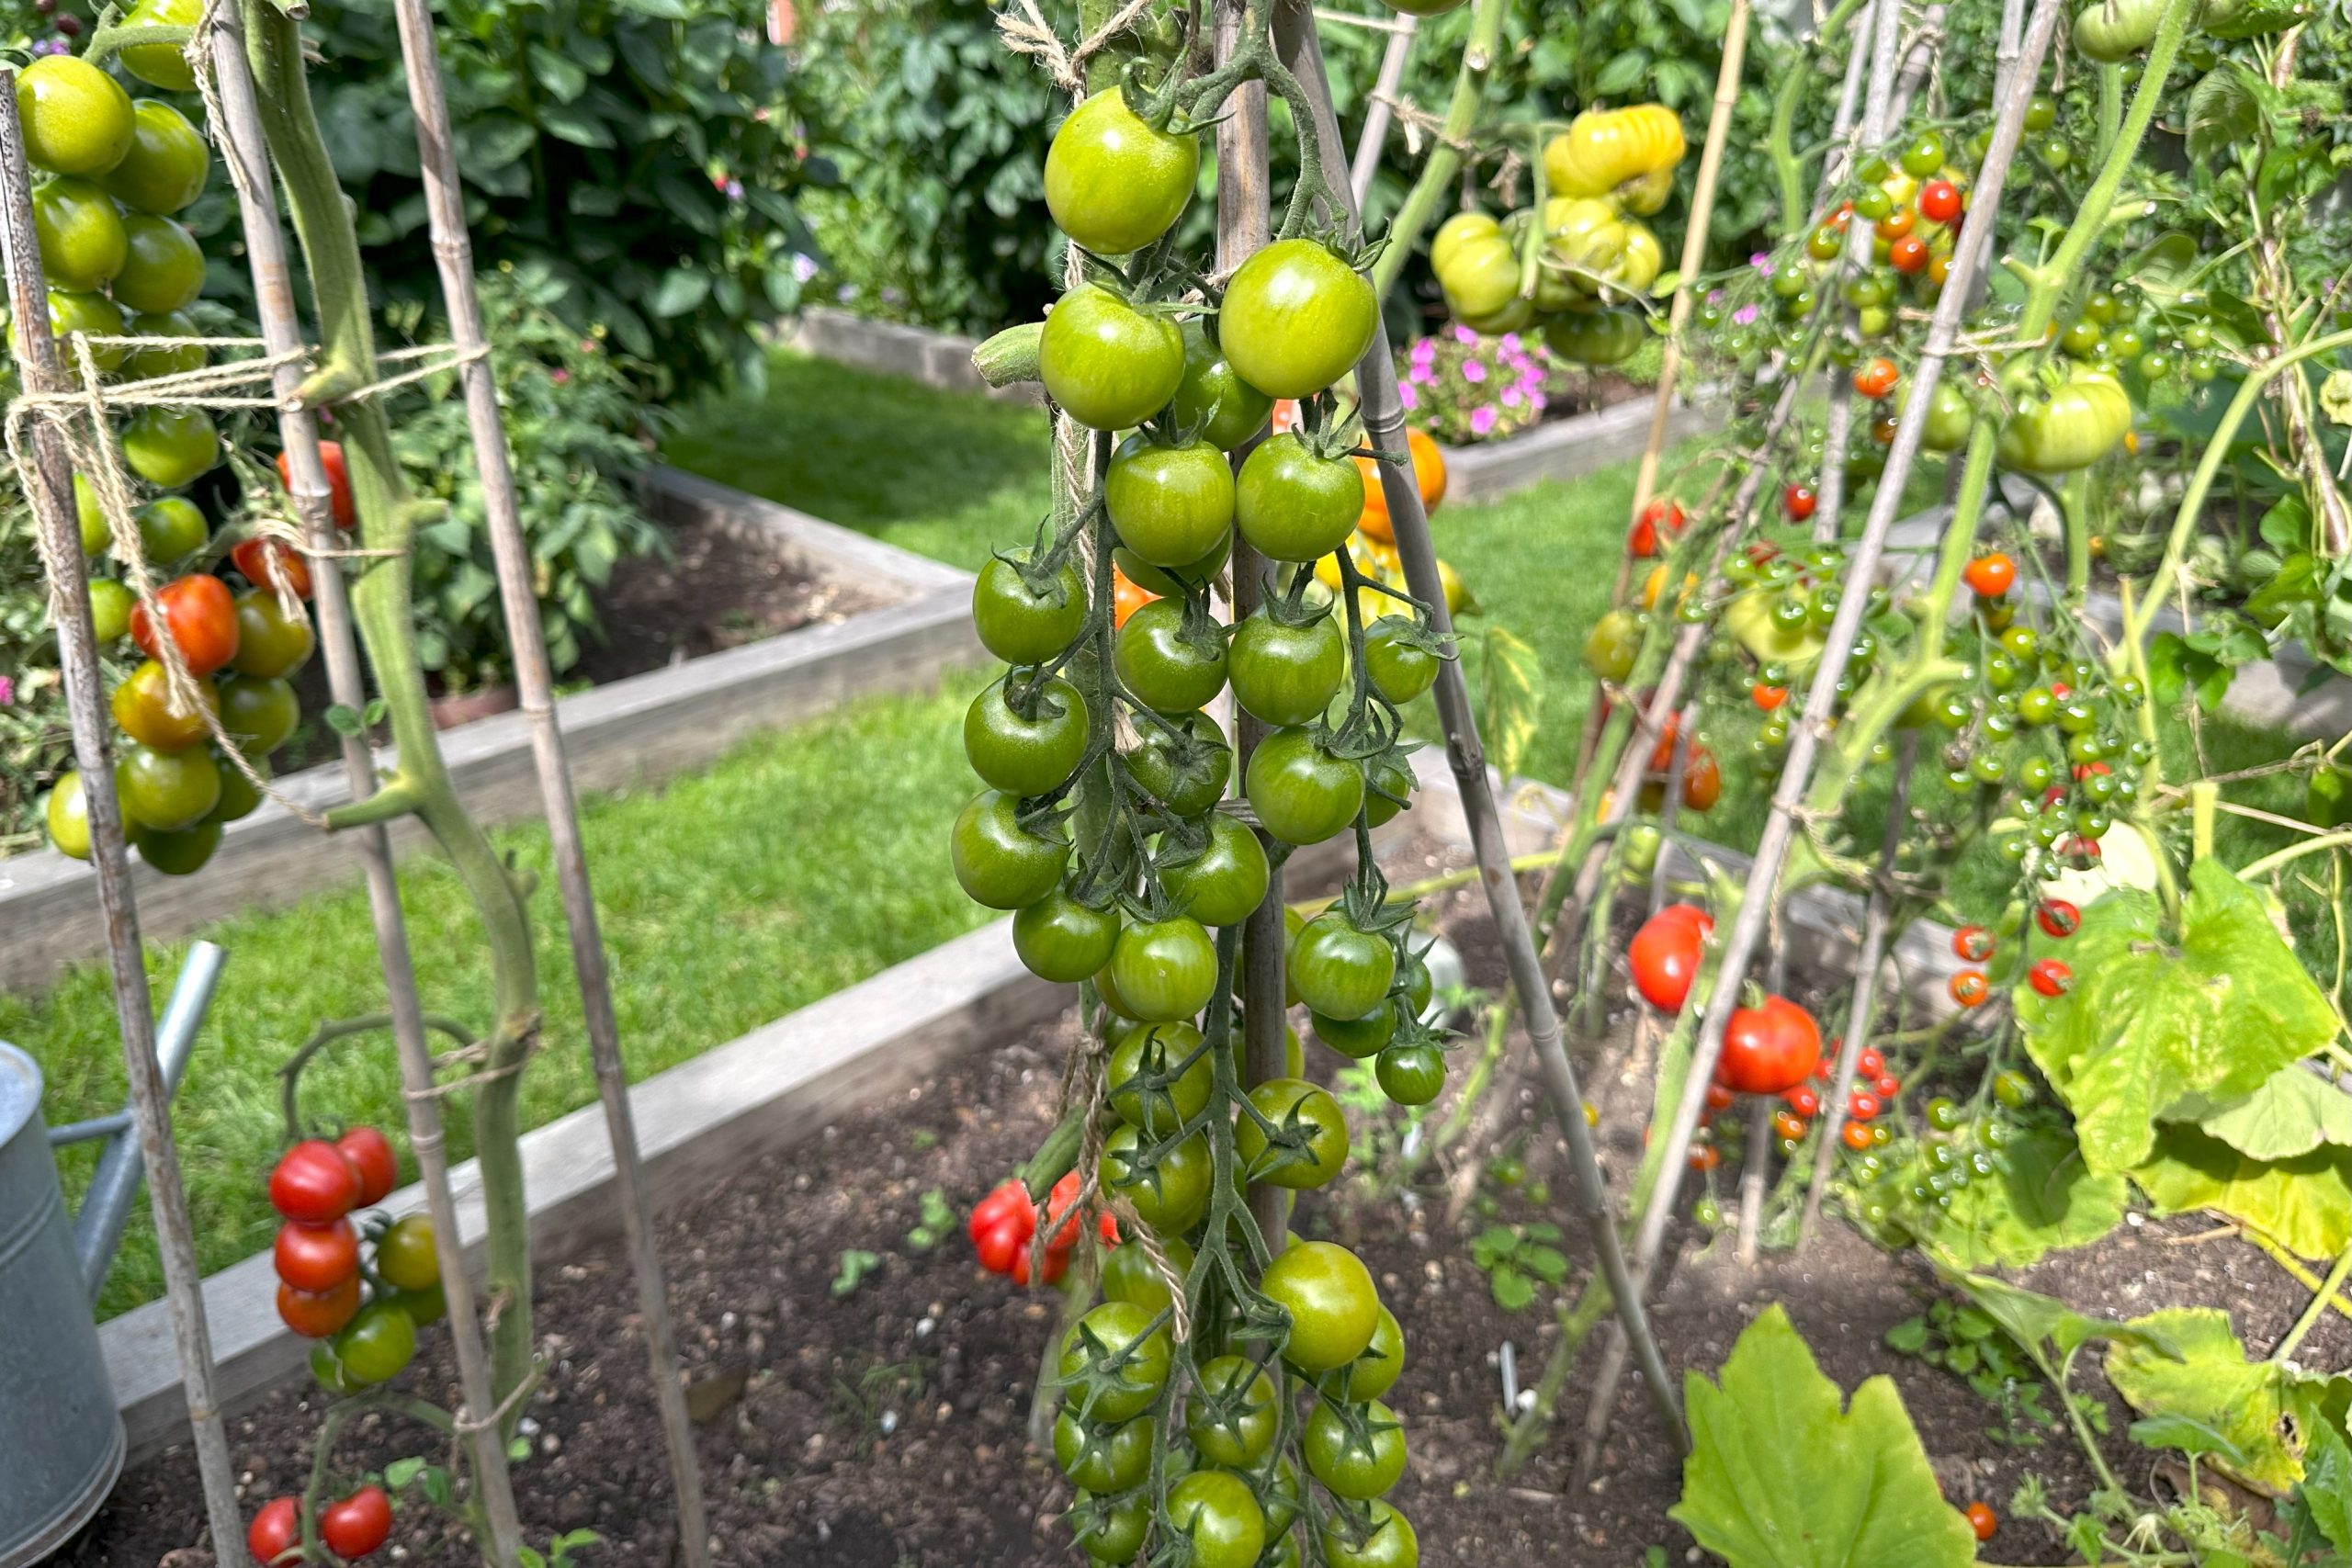 Tomato plants prepared for ripening